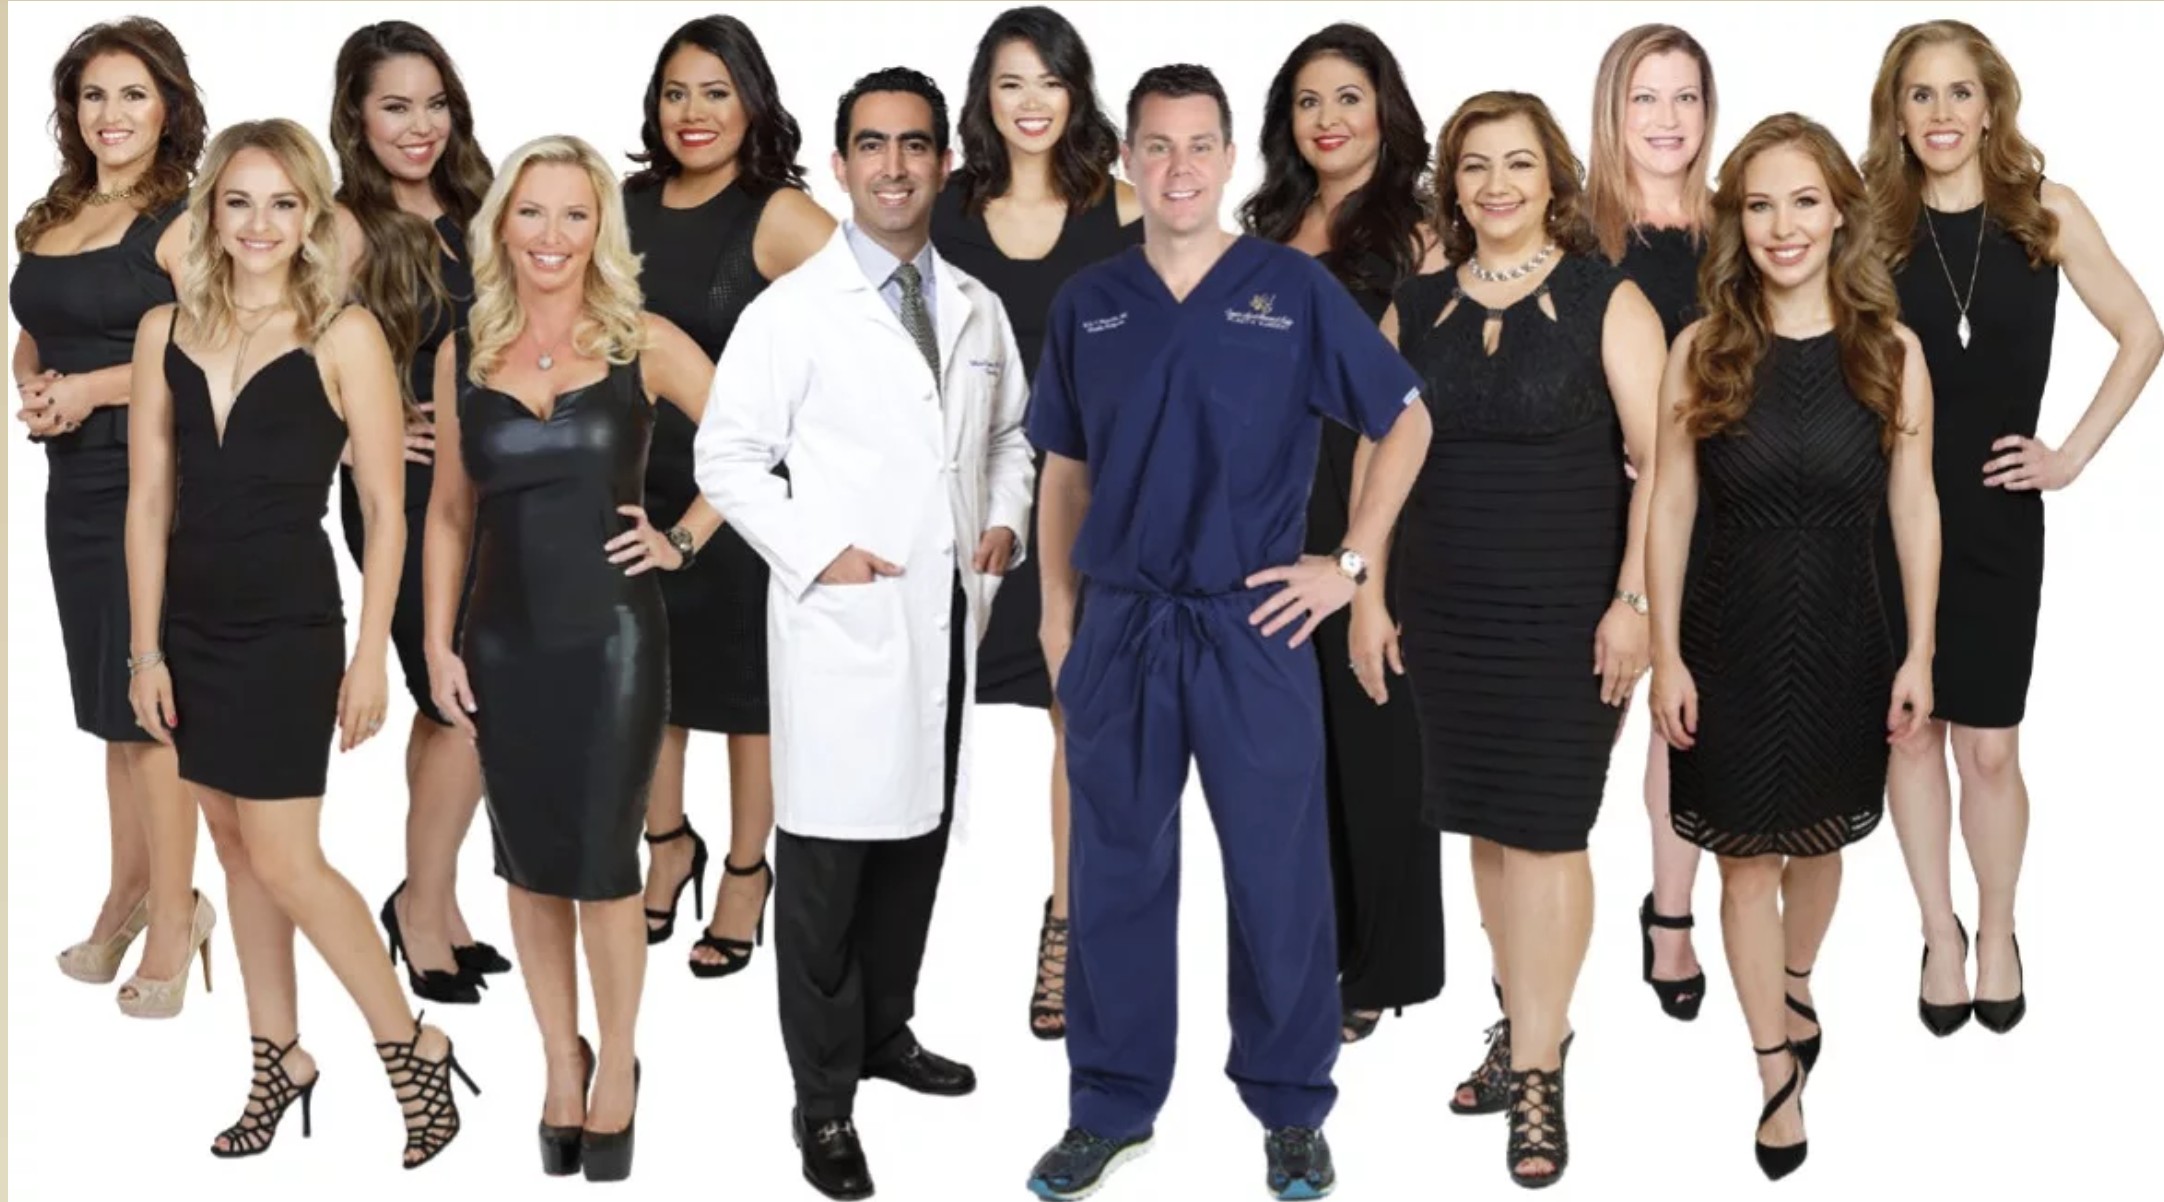 The Clinic for Plastic Surgery - Award-Winning Houston Plastic Surgery